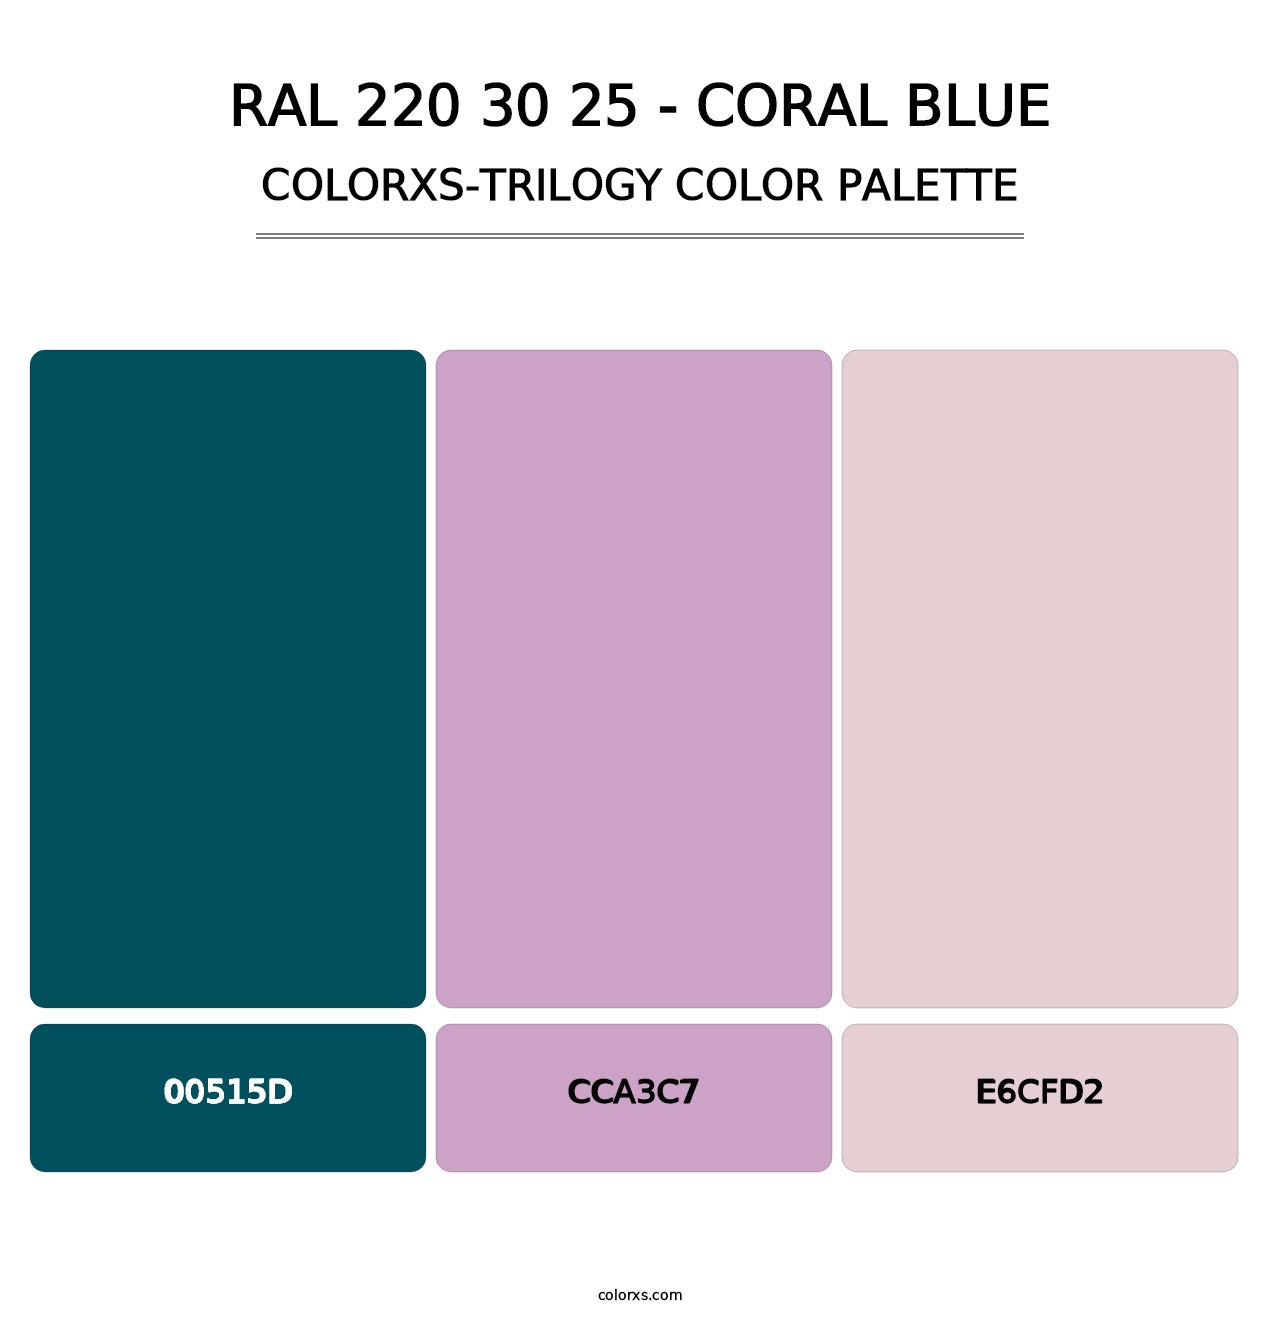 RAL 220 30 25 - Coral Blue - Colorxs Trilogy Palette